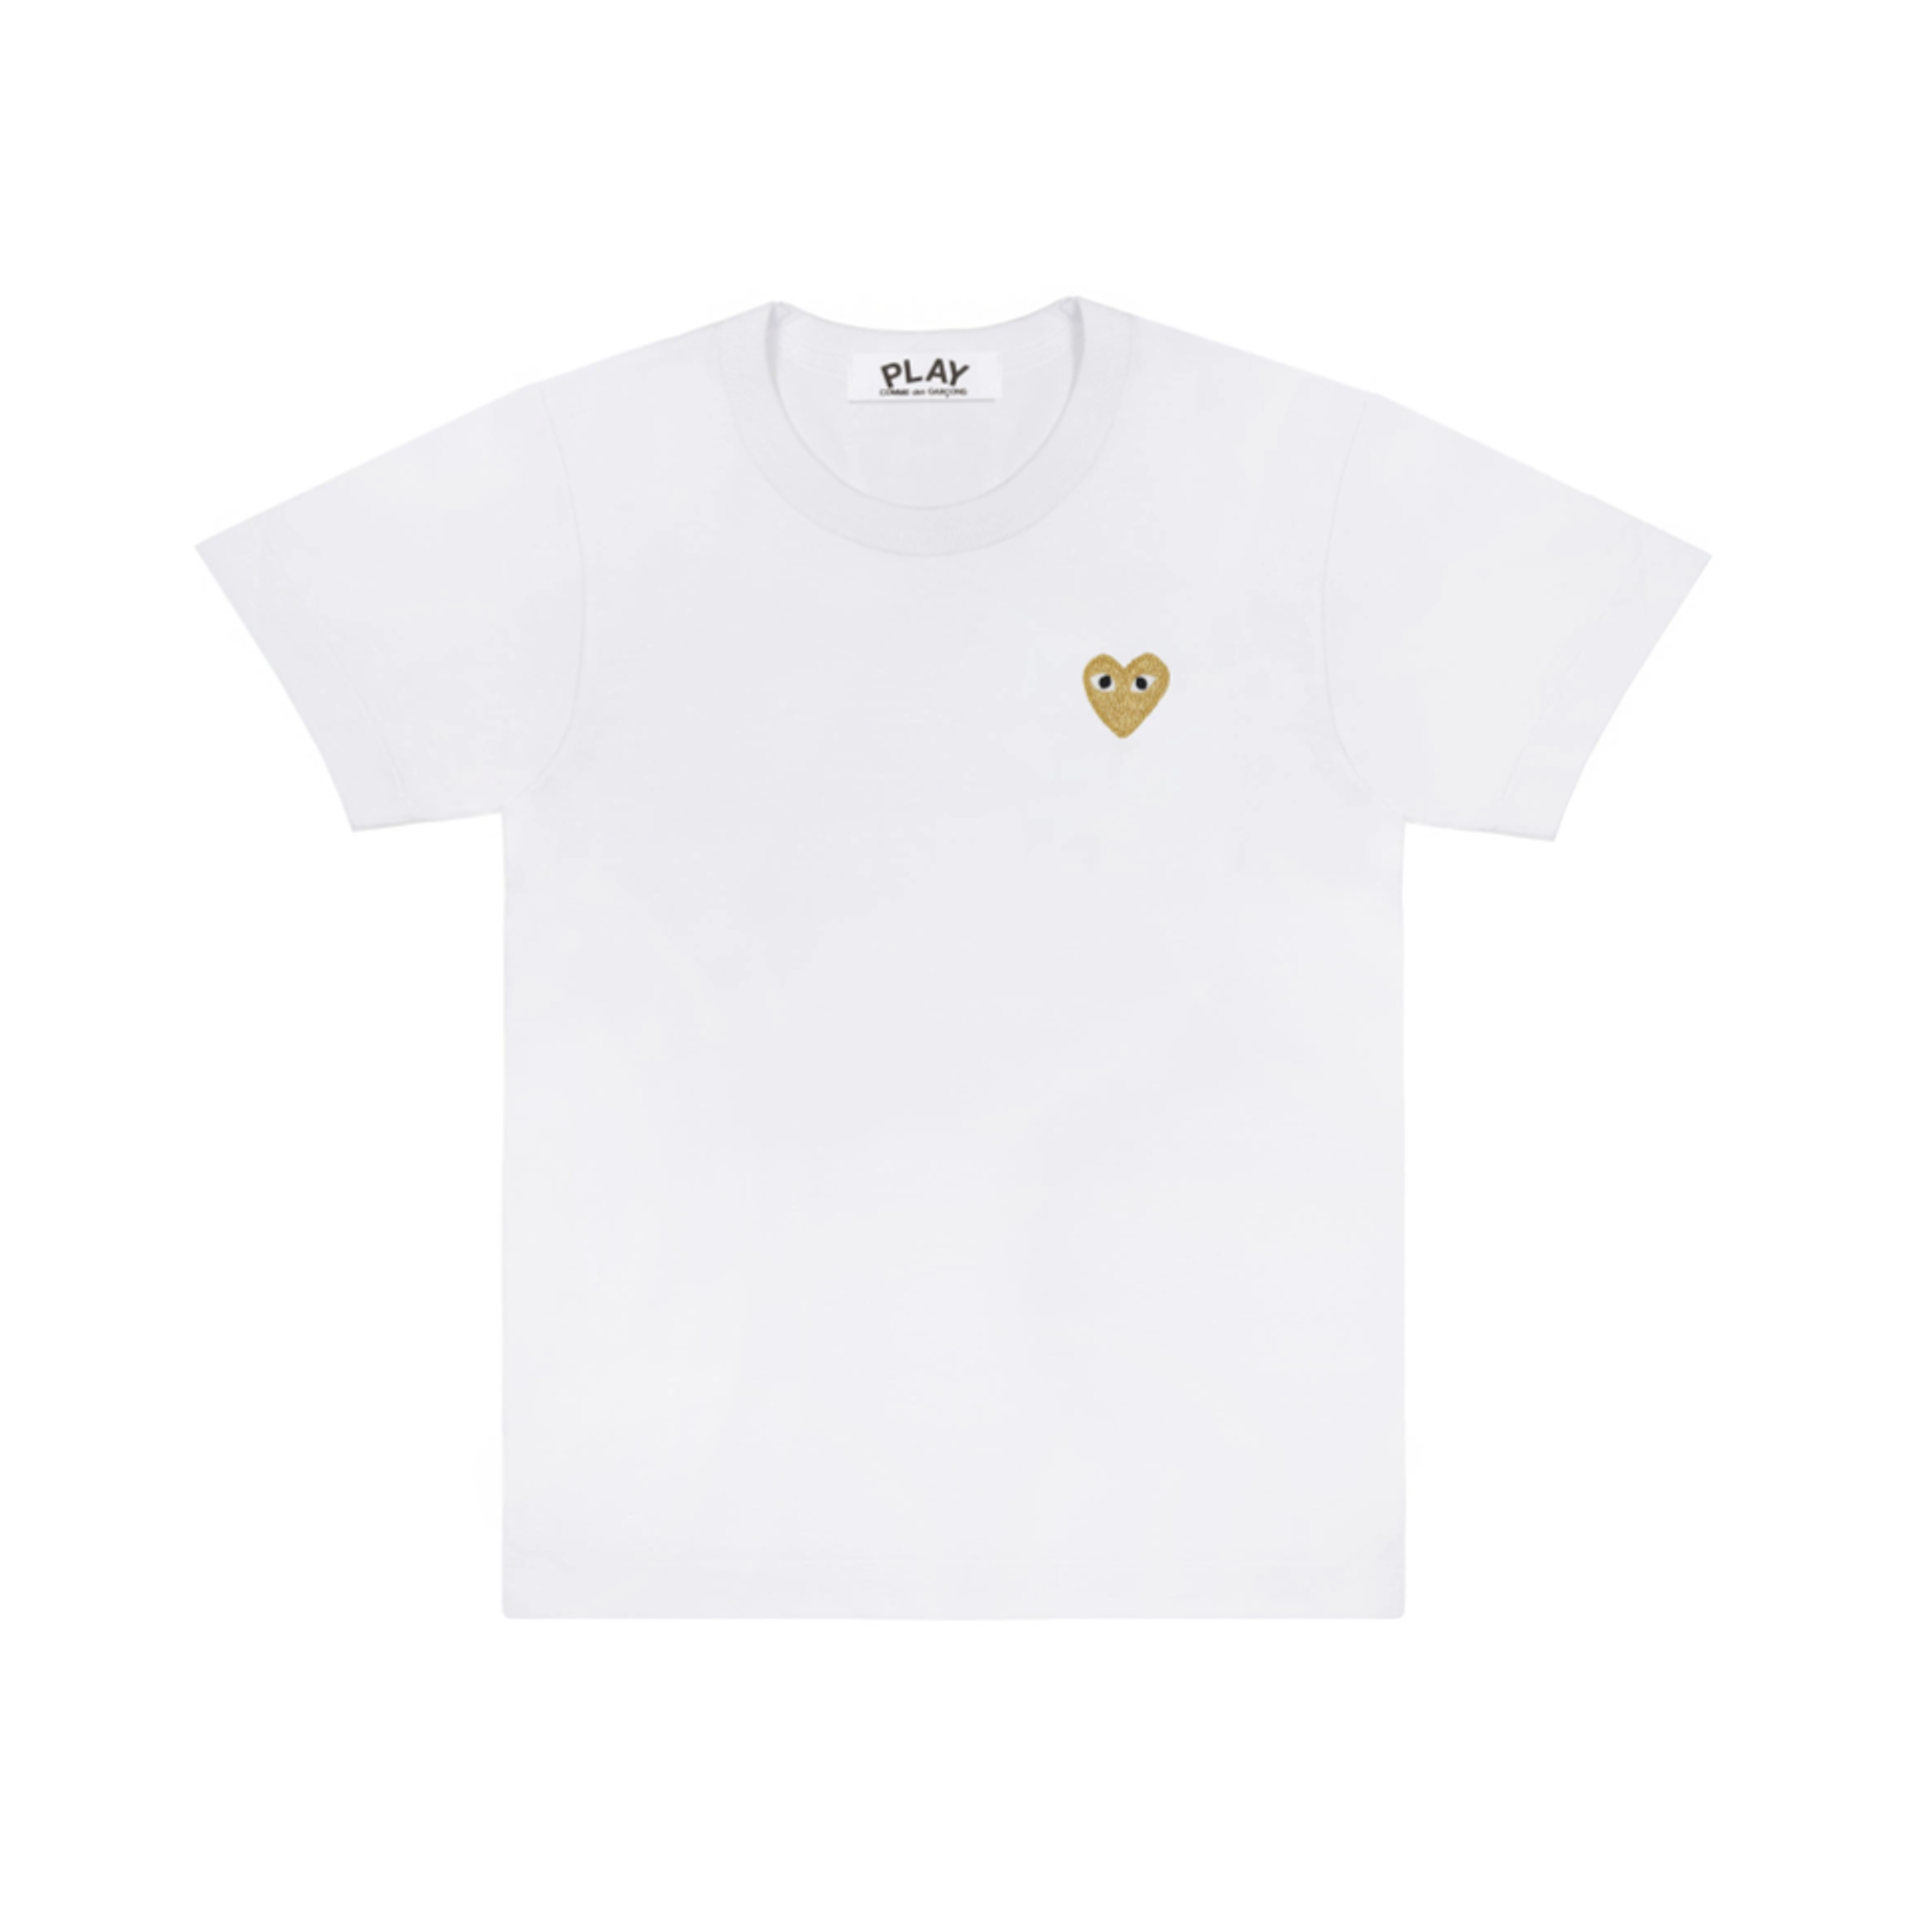 PLAY Gold Heart T-Shirt (White) Ladies'